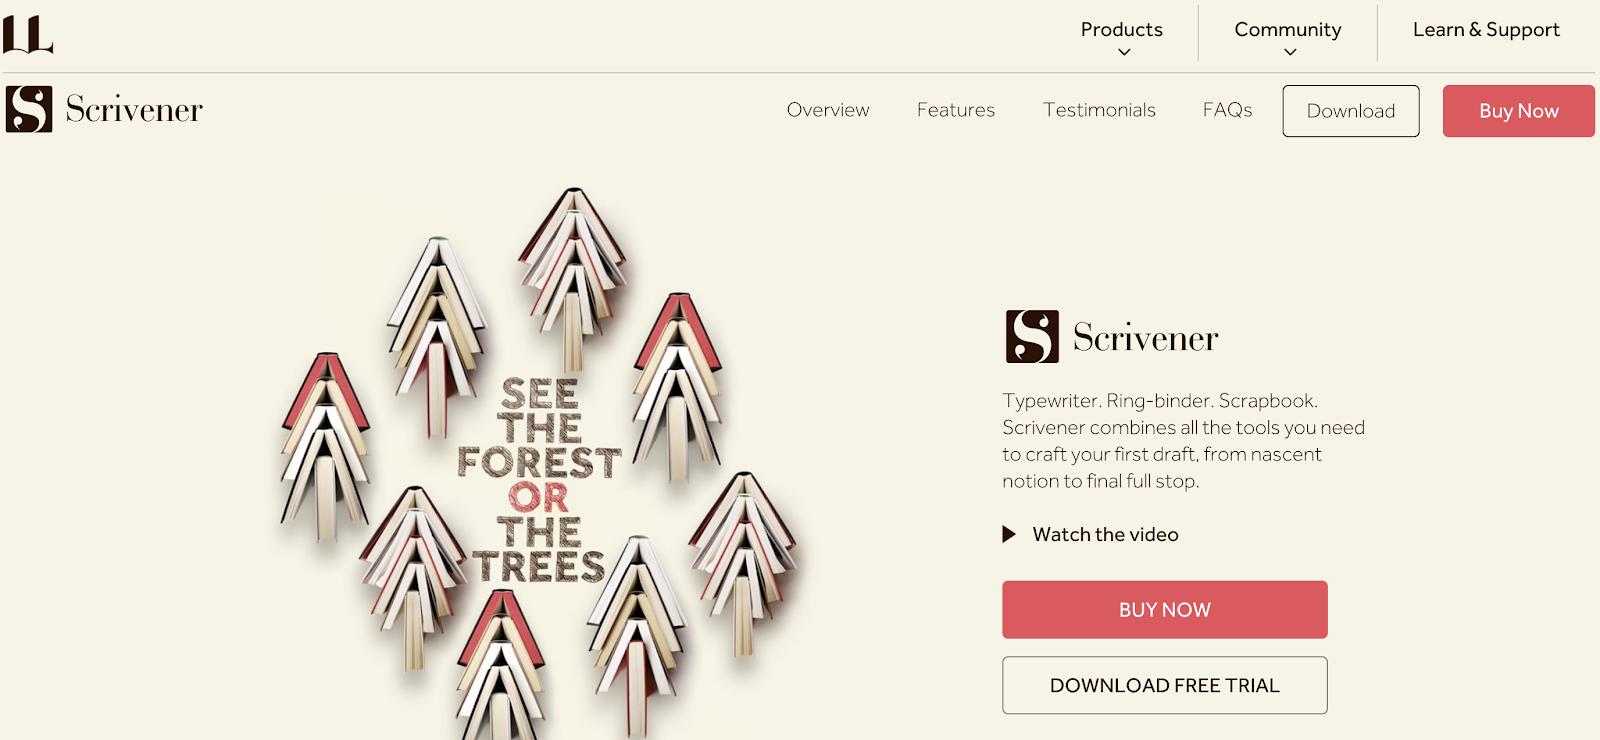 Scrivener Homepage Screenshot (eBook Designer Tool)